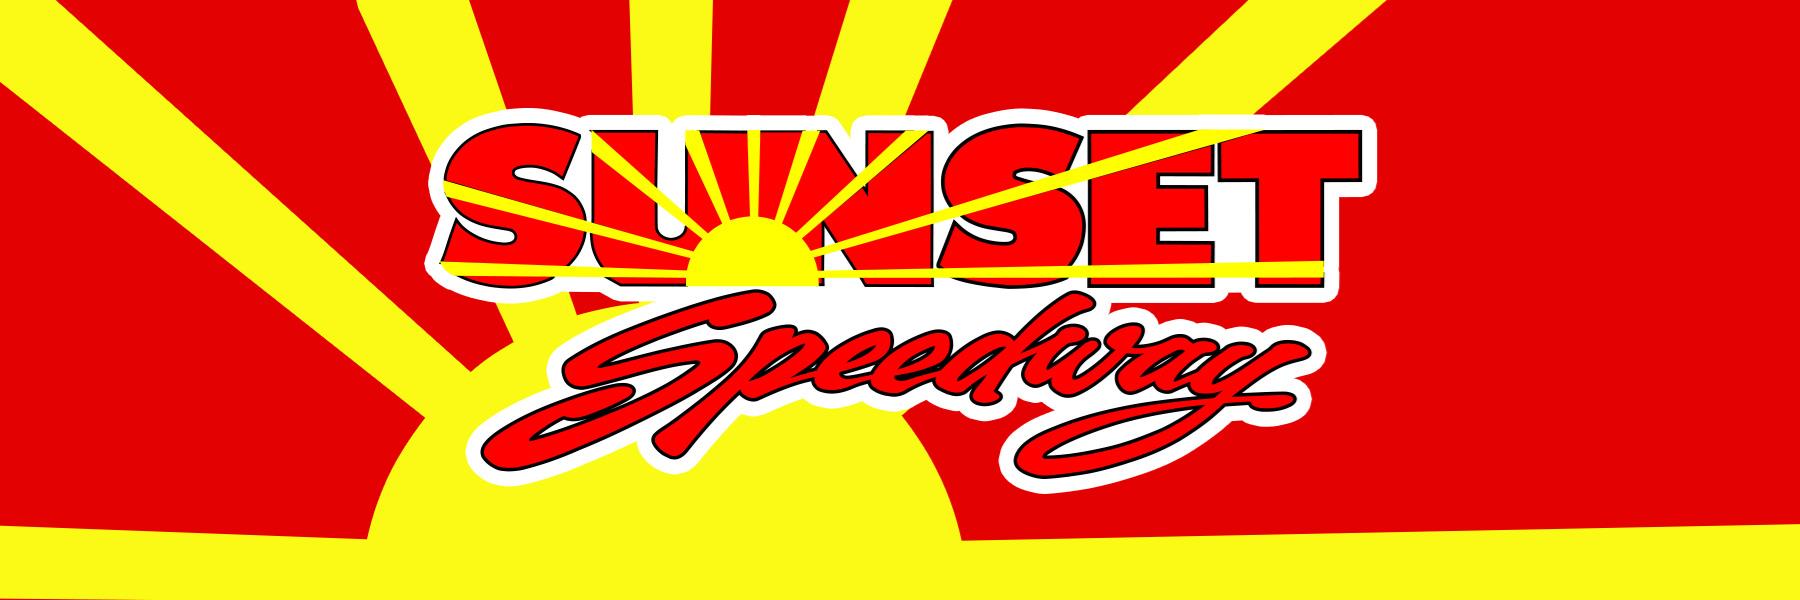 8/8/1996 - Sunset Speedway